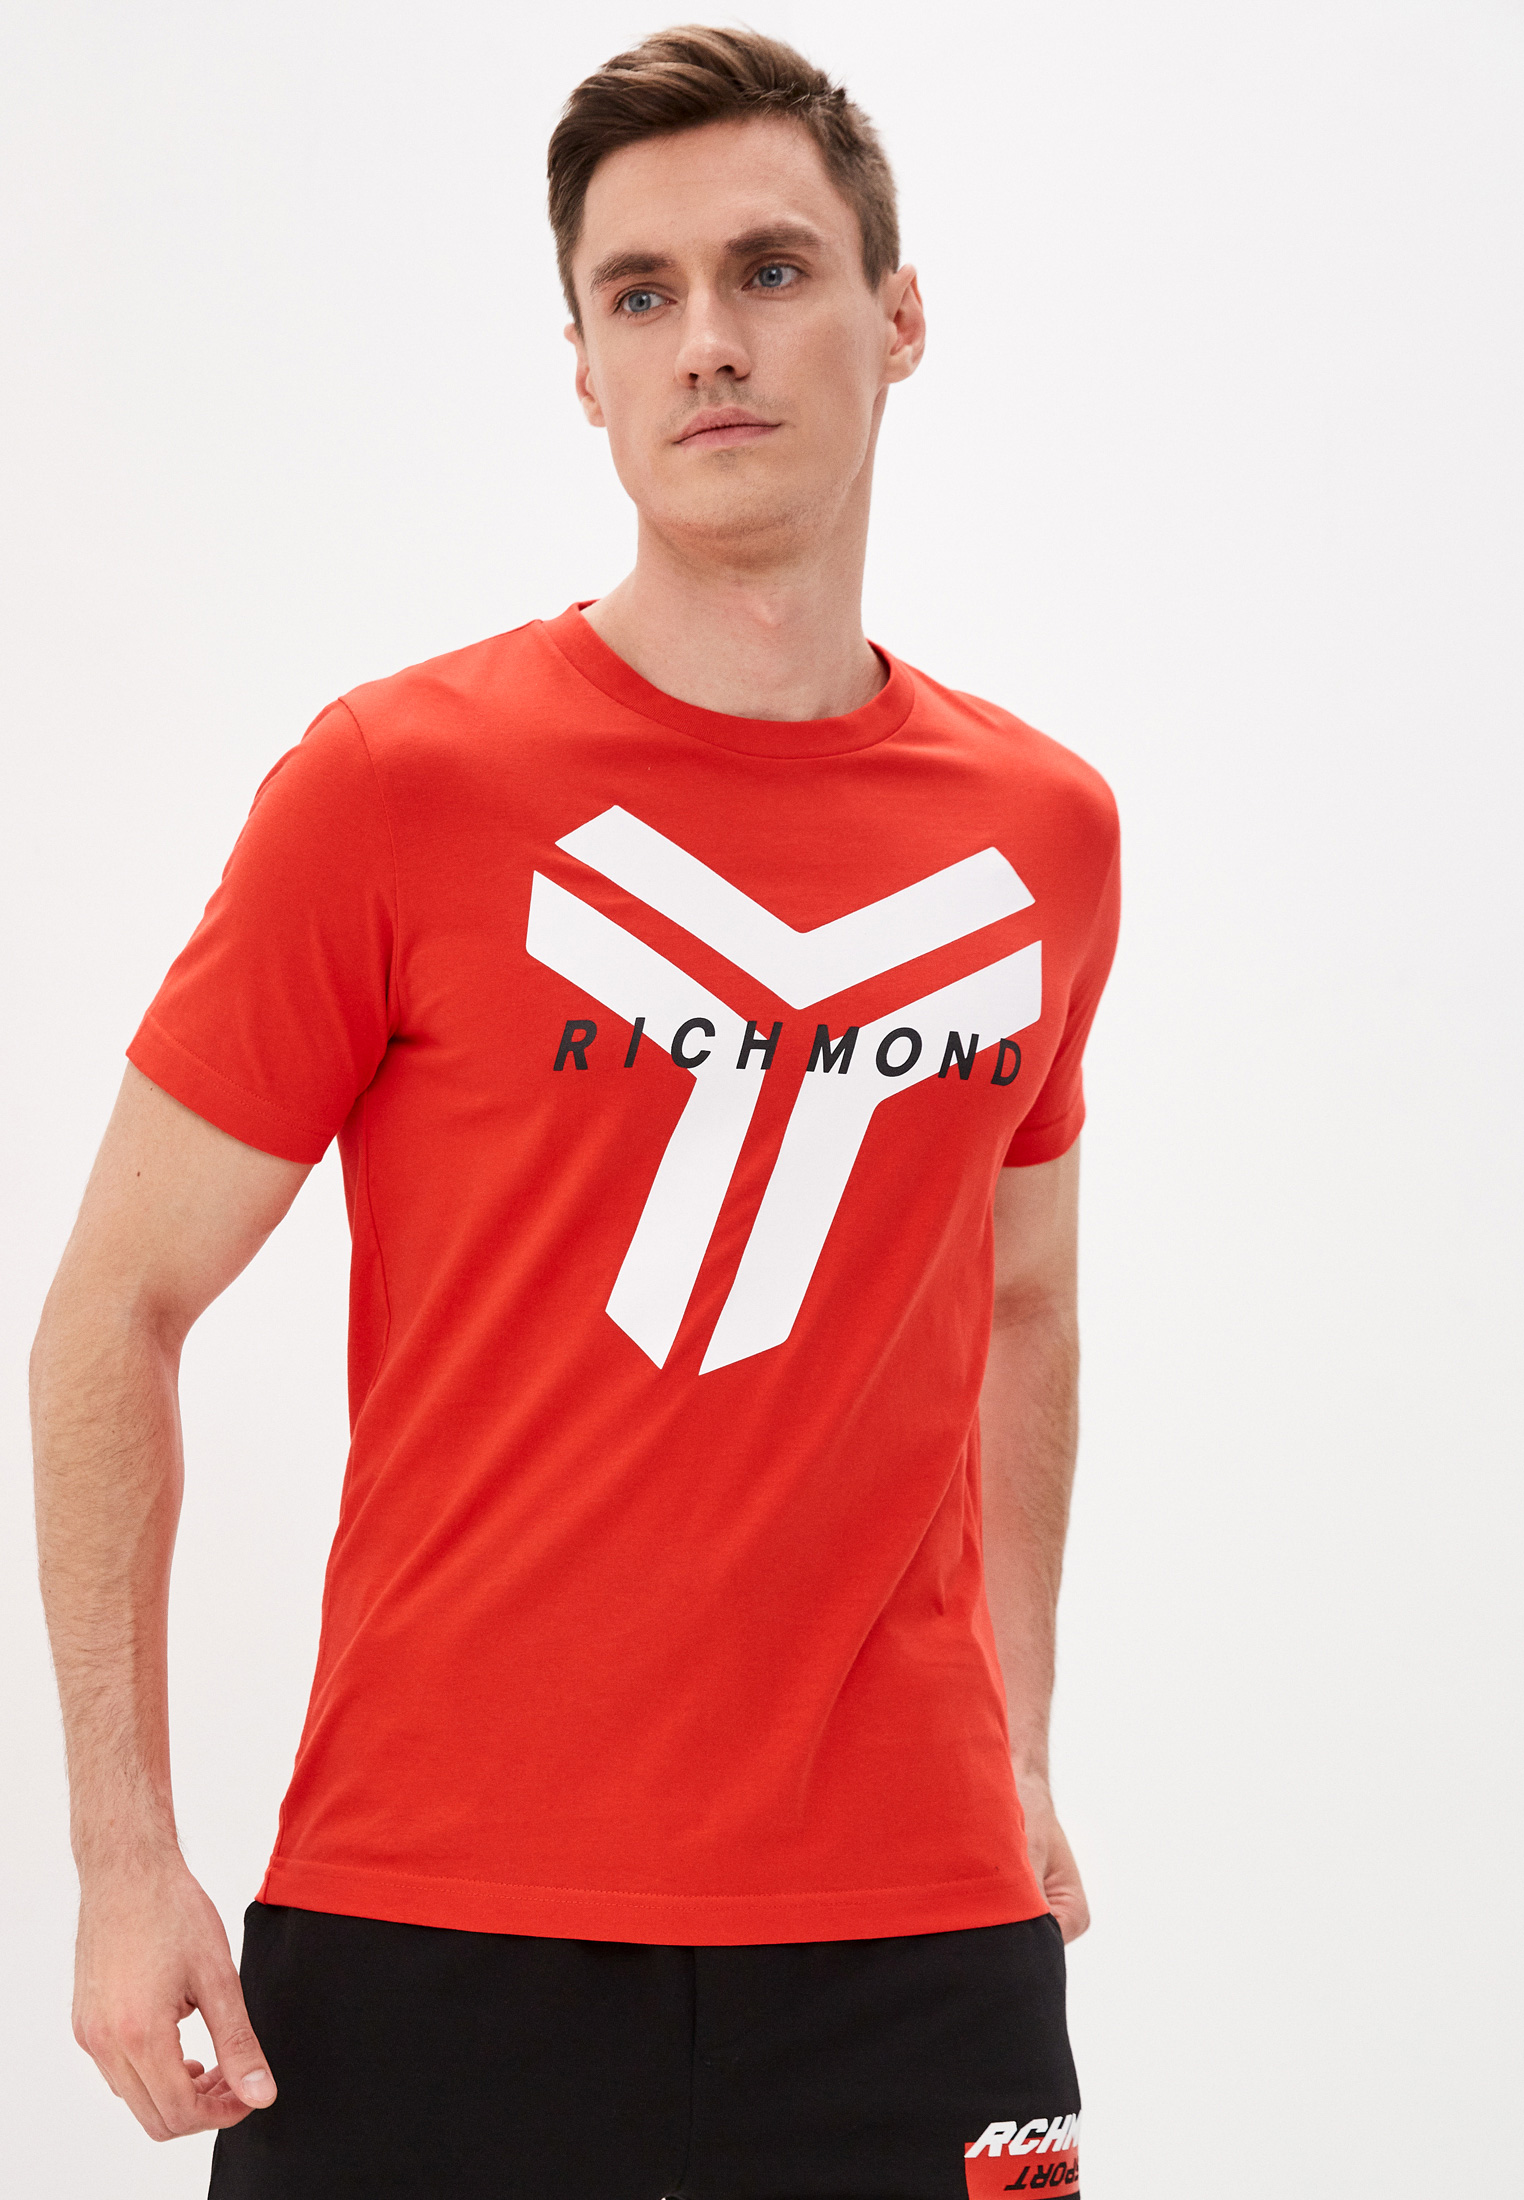 Футболка ричмонд. Jr Richmond футболка. Richmond Sport одежда. Футболки поло Ричмонд. Richmond футболка мужская.